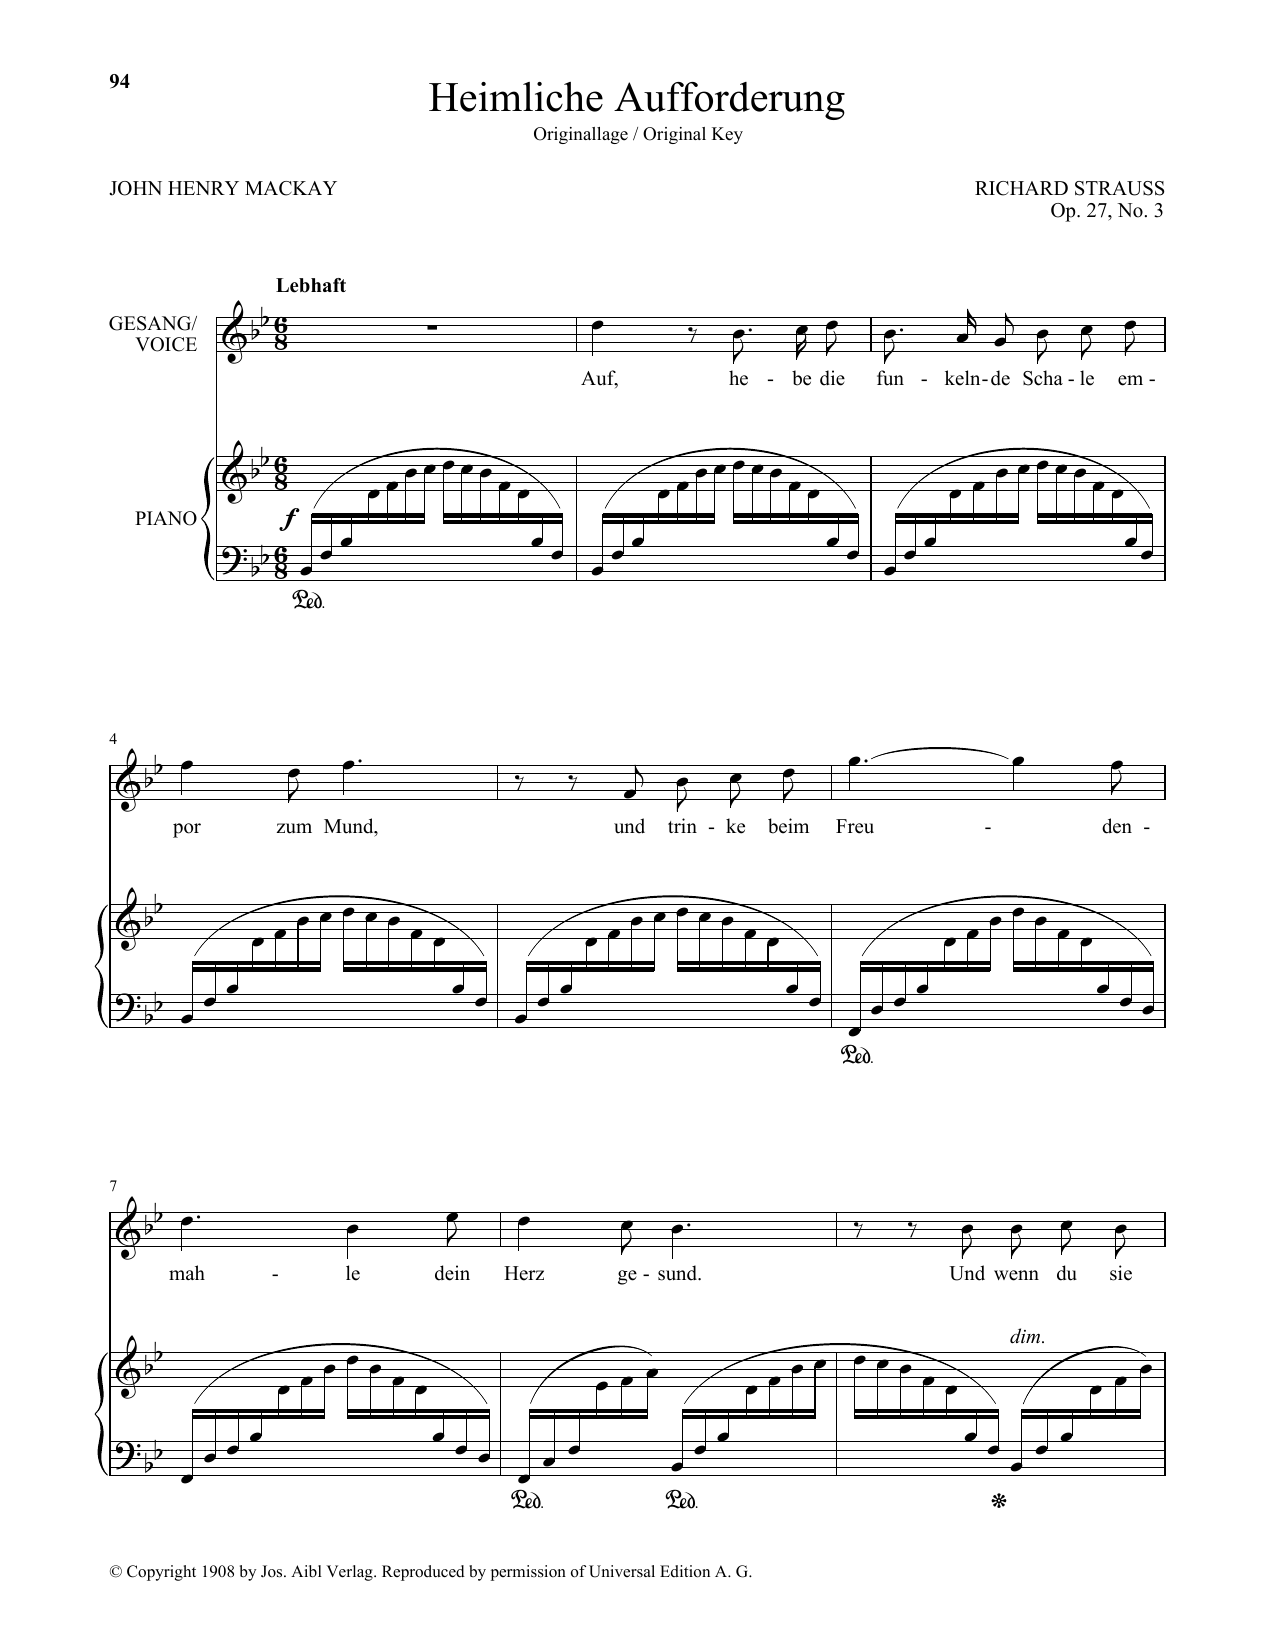 Richard Strauss Heimliche Aufforderung (High Voice) Sheet Music Notes & Chords for Piano & Vocal - Download or Print PDF